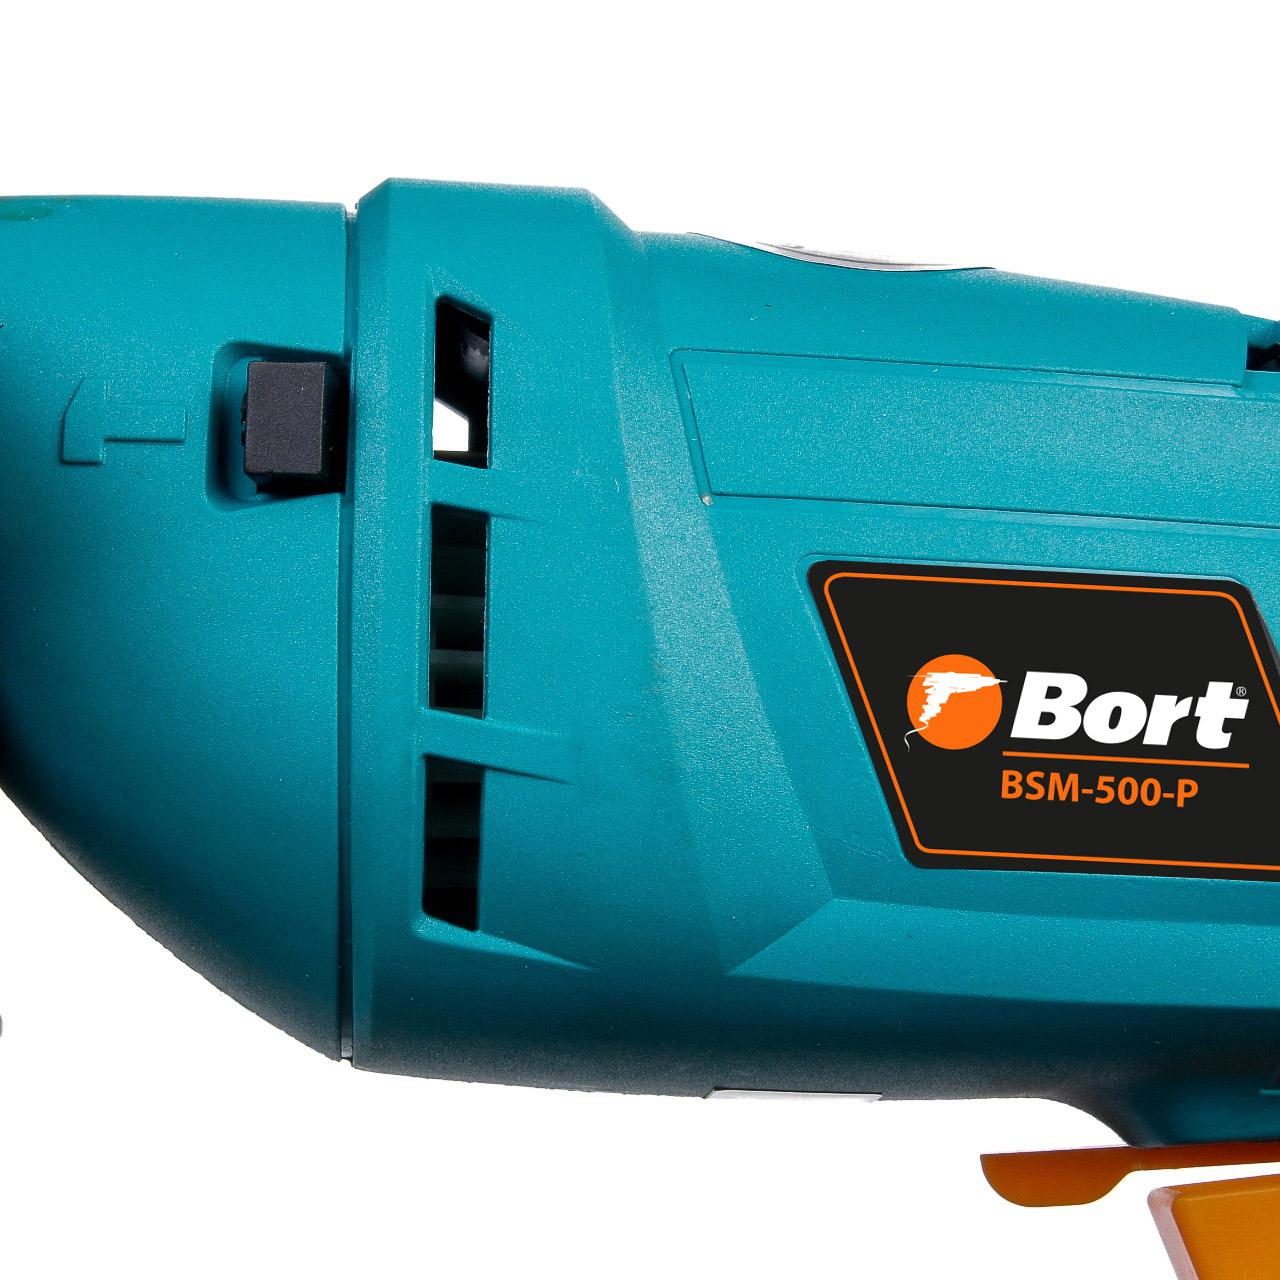  Bort BSM-500-P (93729080)